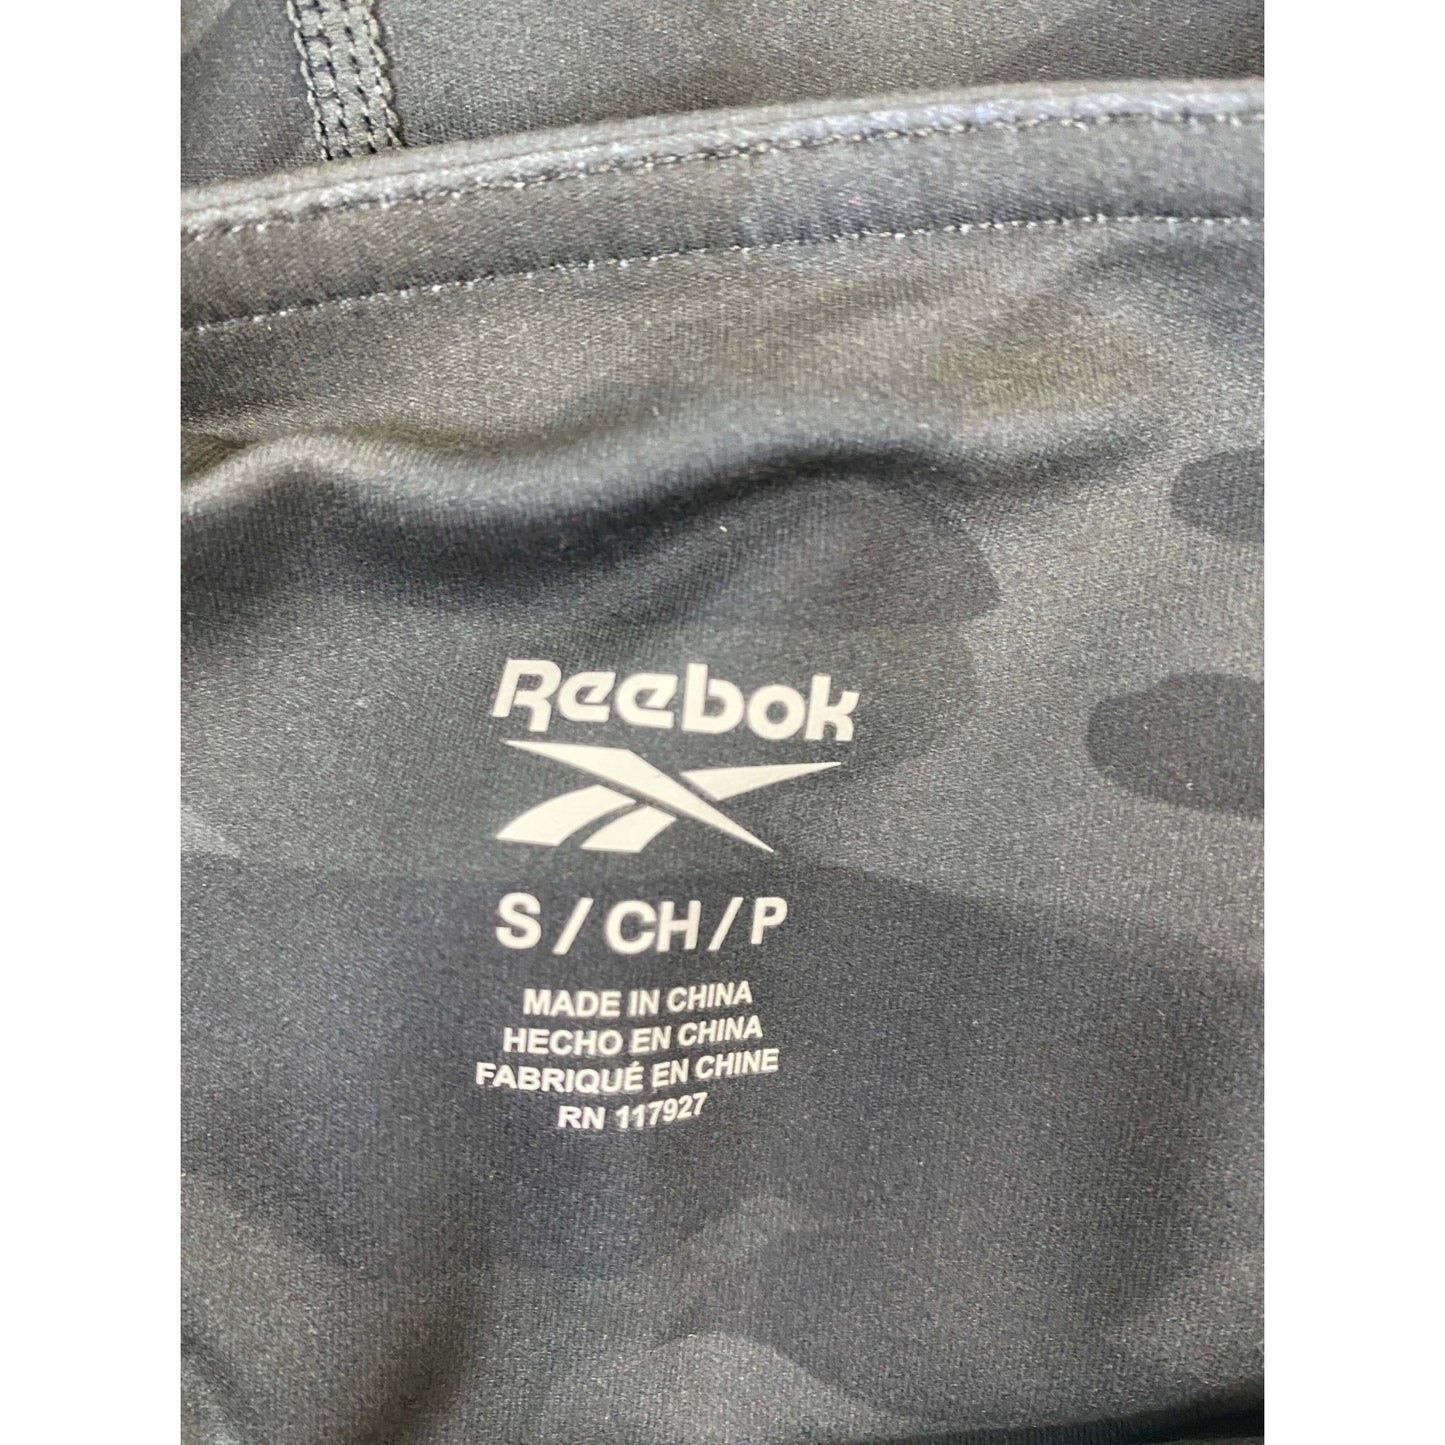 Reebok-Reebok Fitted High Rise Women's Short - Brandat Outlet